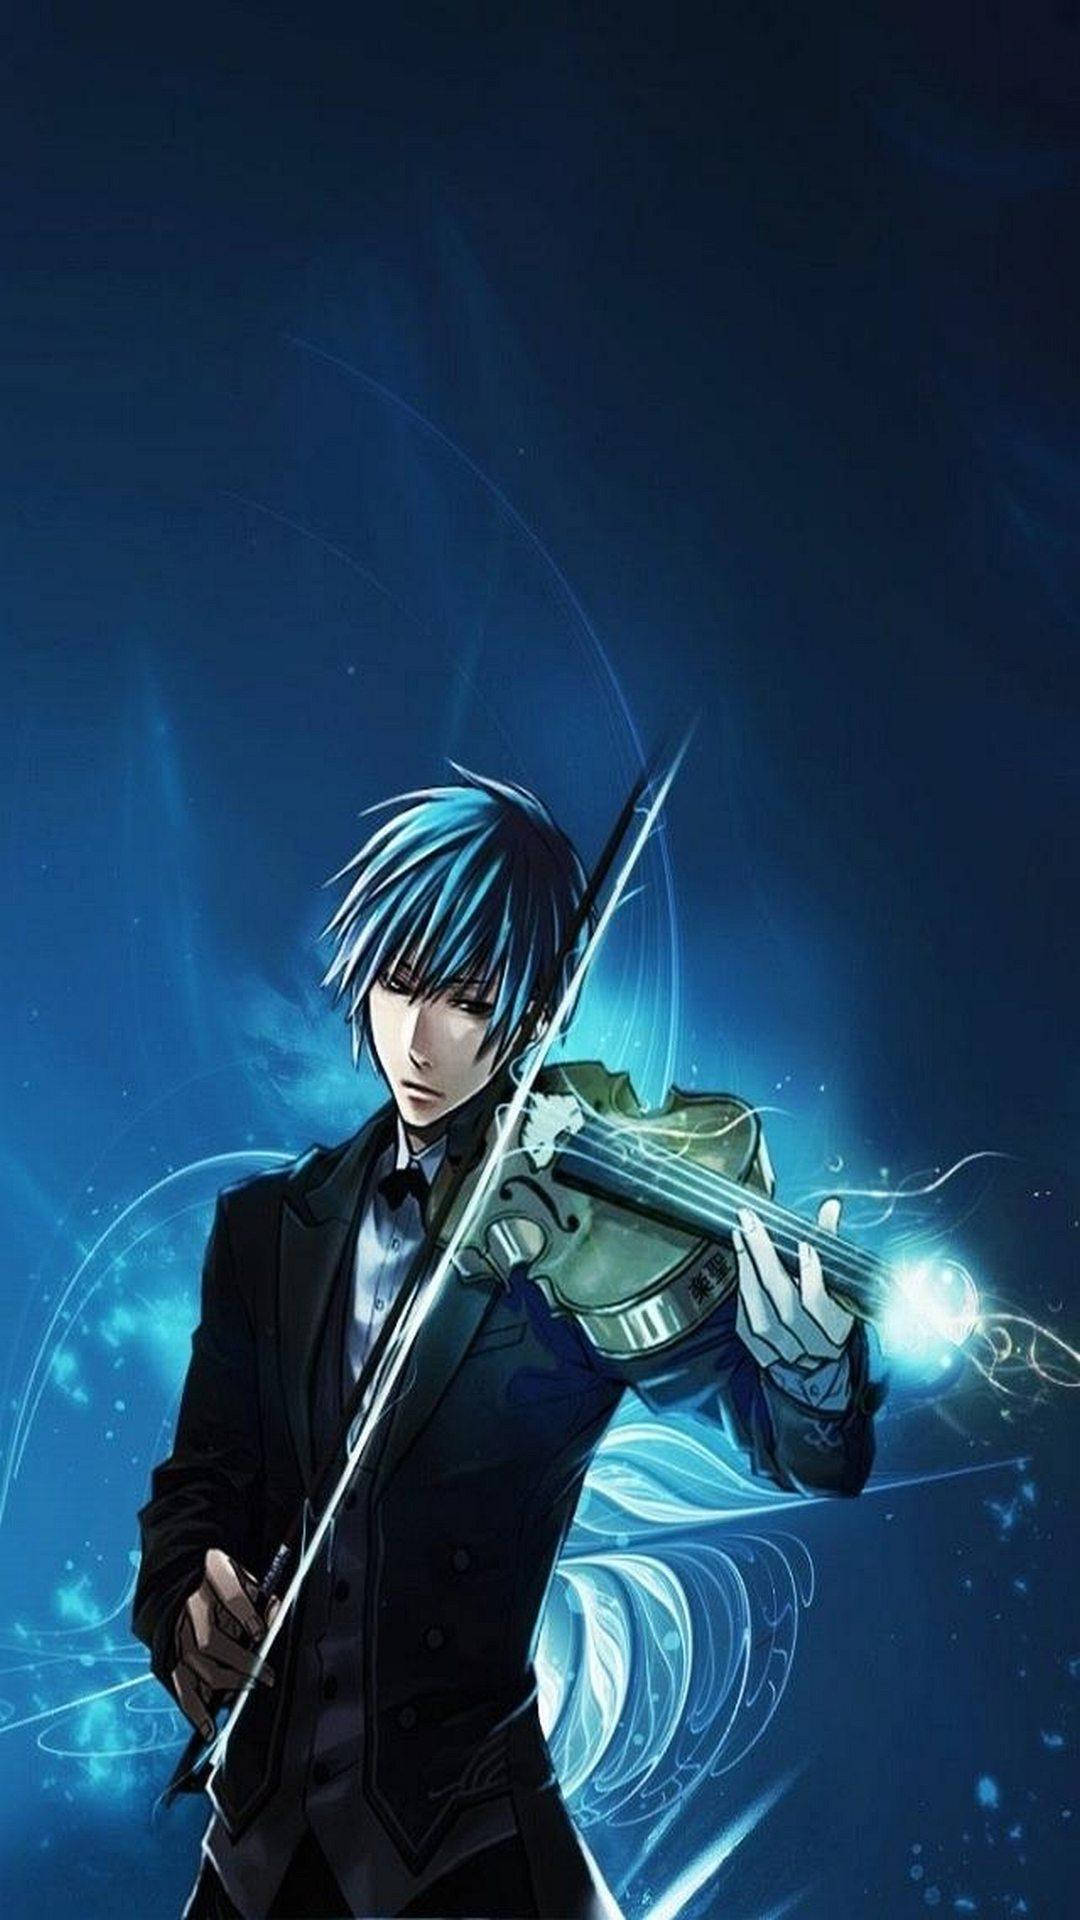 1080p Hd Anime Boy Playing Violin